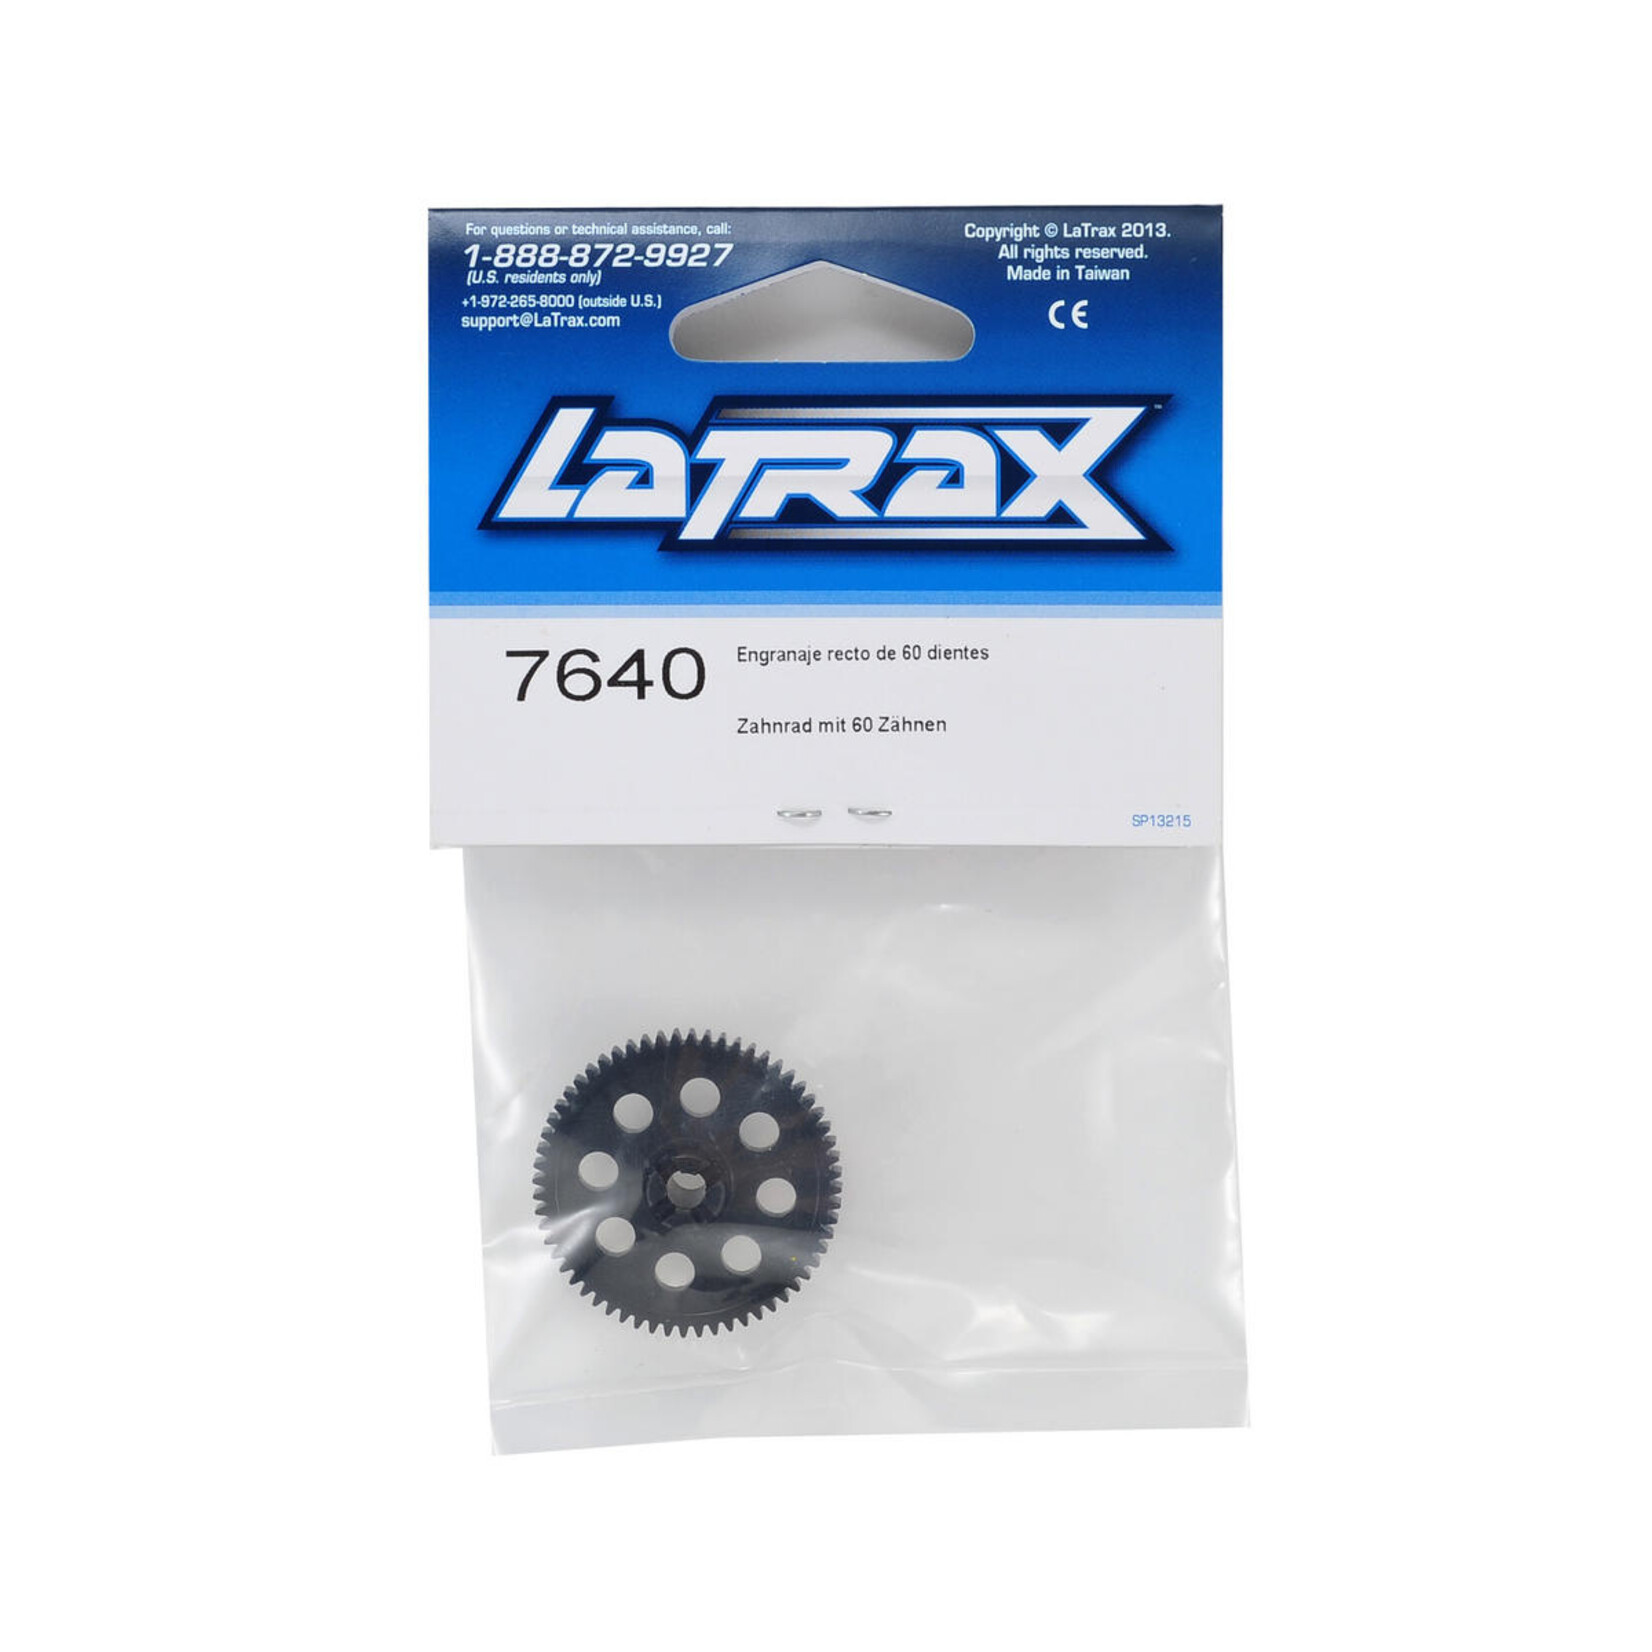 LaTrax Traxxas LaTrax Spur Gear (60T) #7640